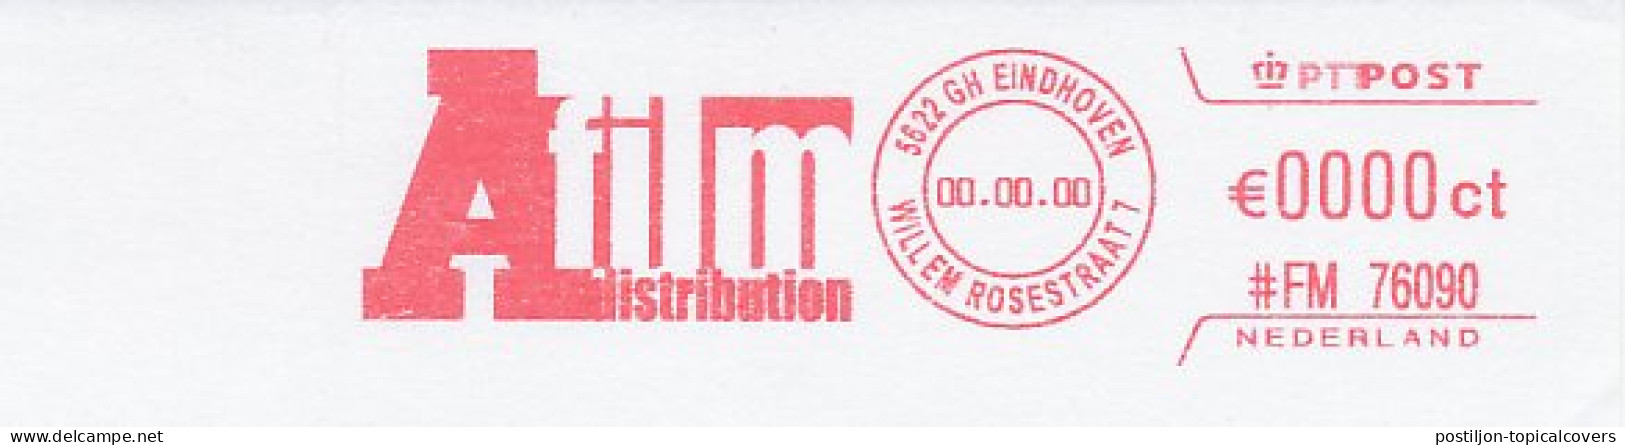 Meter Proof / Test Strip FRAMA Supplier Netherlands A Fiml Distribution - Kino